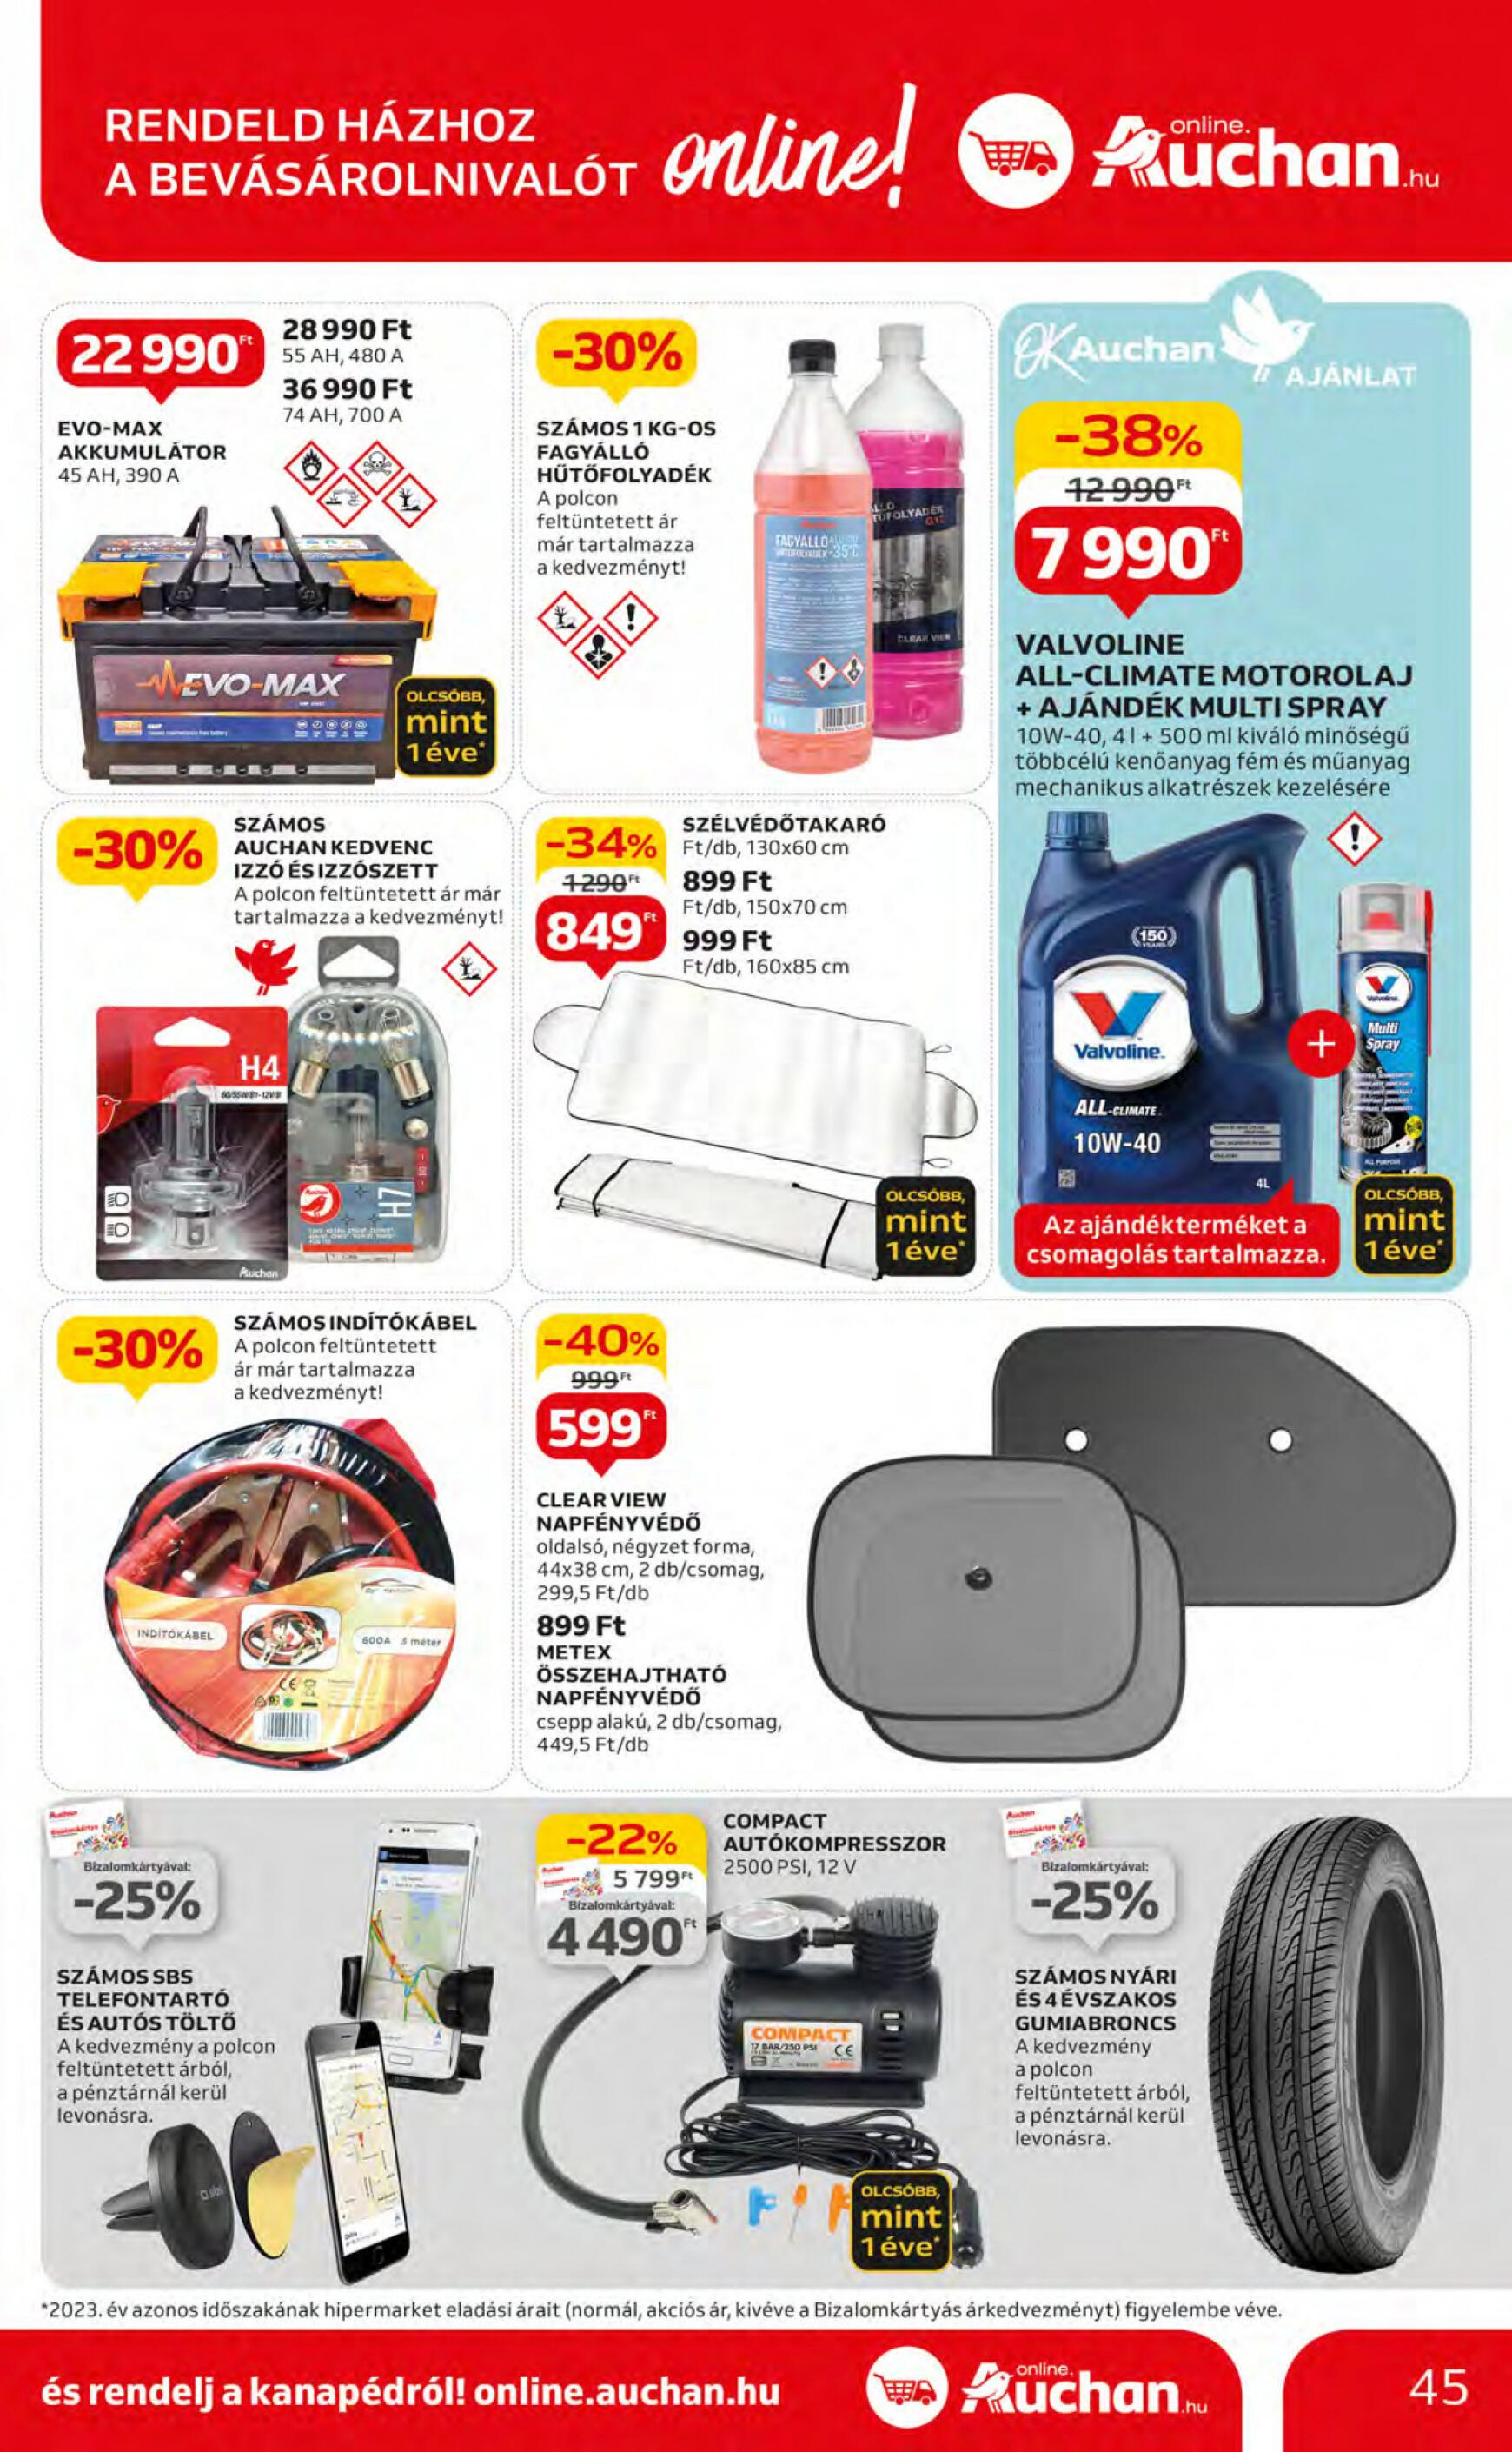 auchan - Aktuális újság Auchan 05.09. - 05.15. - page: 45